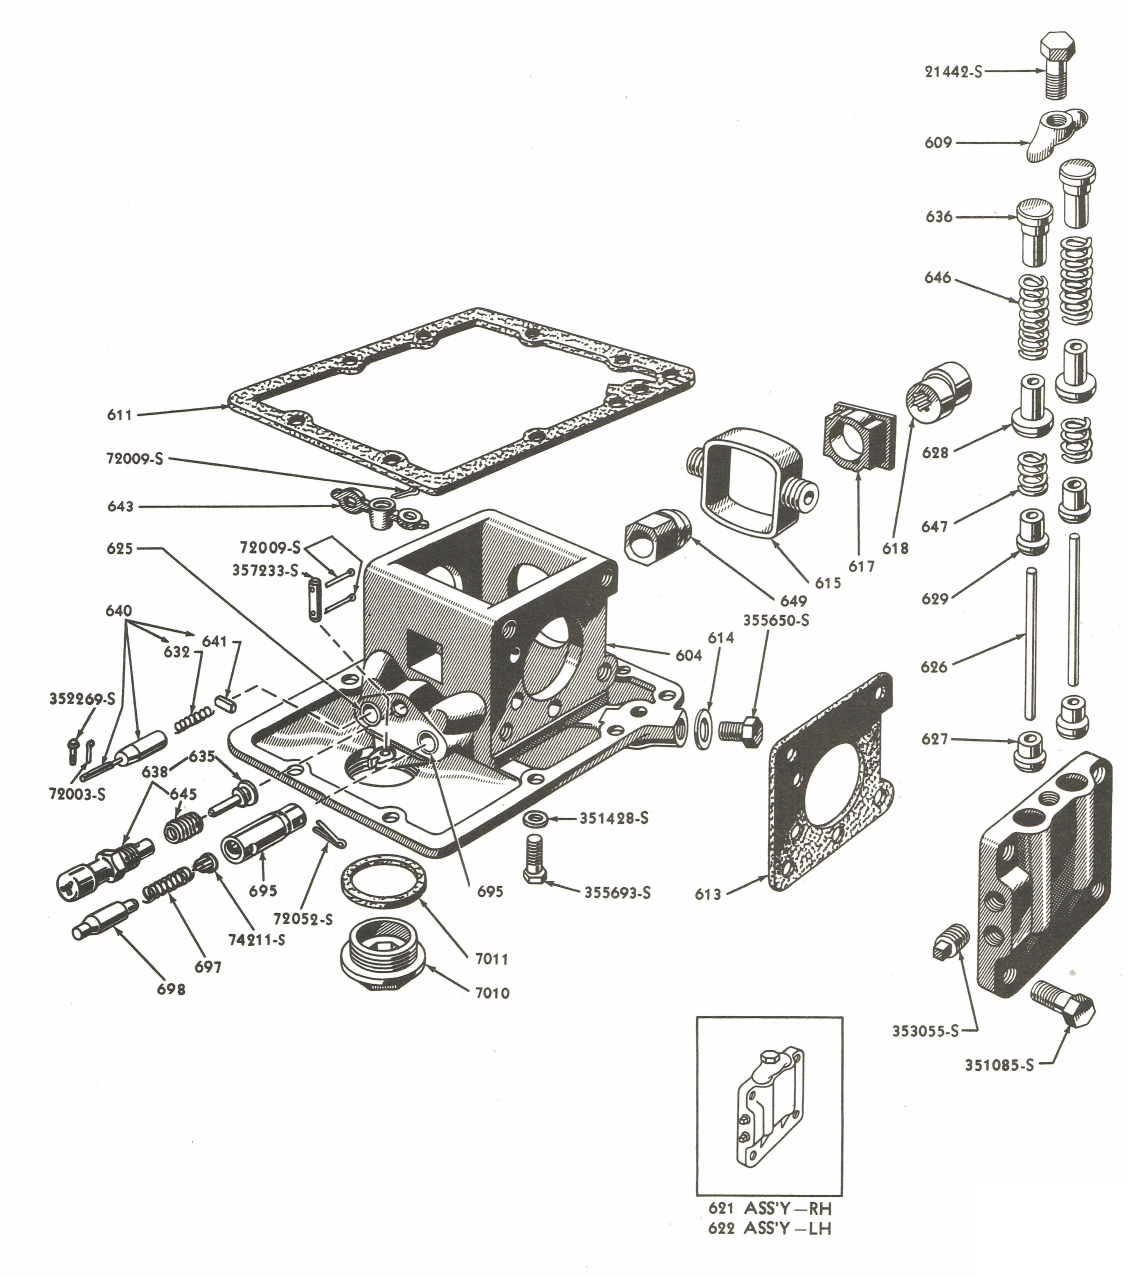 12 Volt Hydraulic Pump Wiring Diagram Ford Naa Hydraulic Diagram Wiring Diagram Sessions